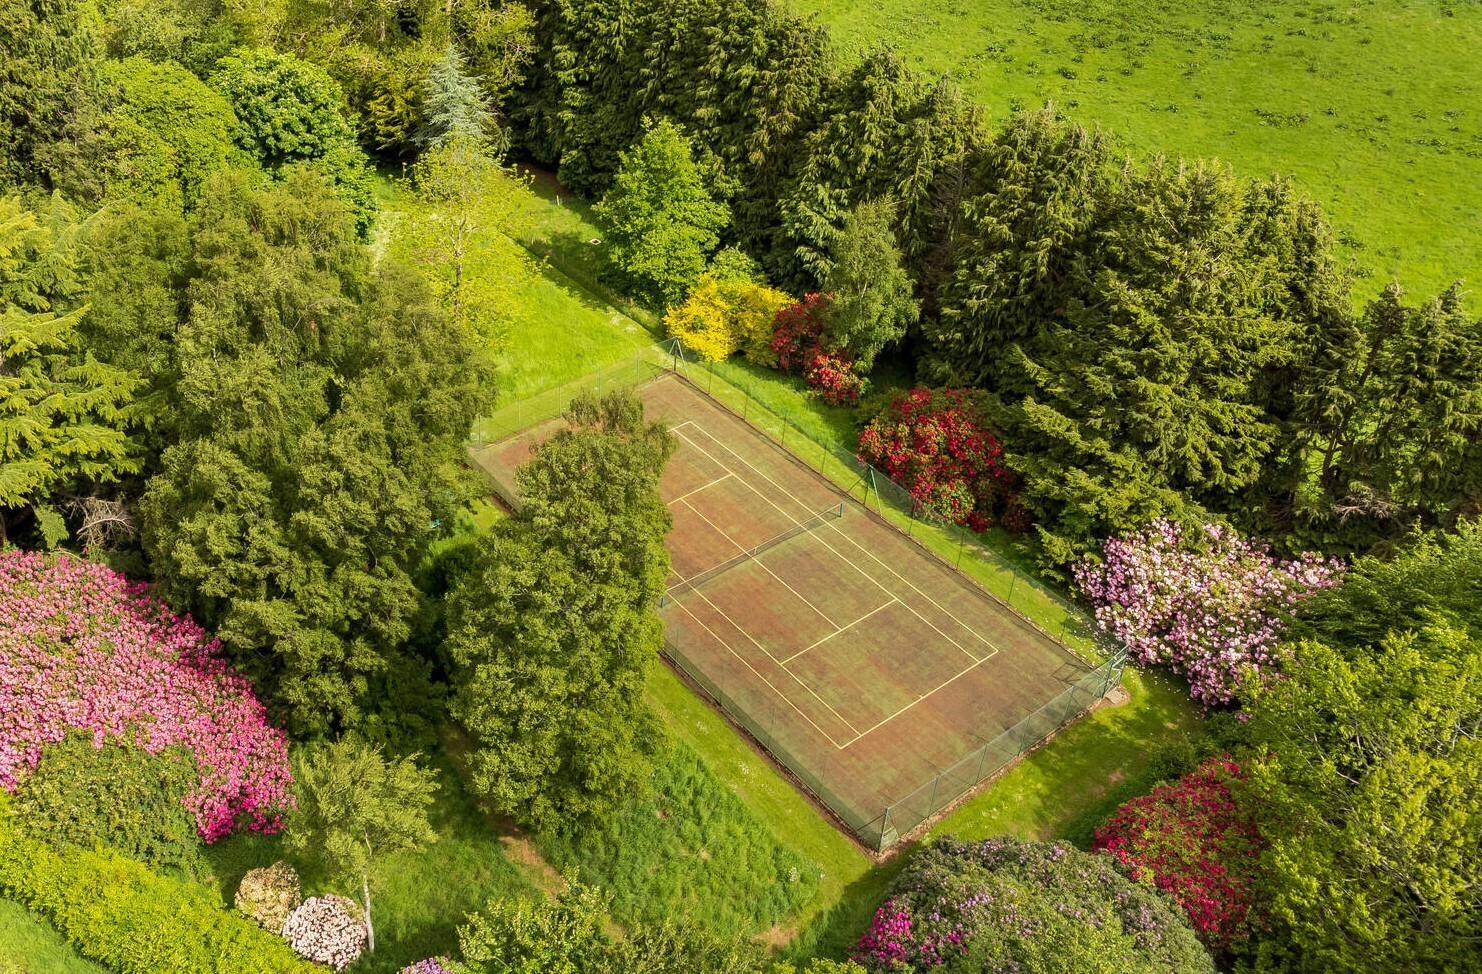 Glencarse House tennis court